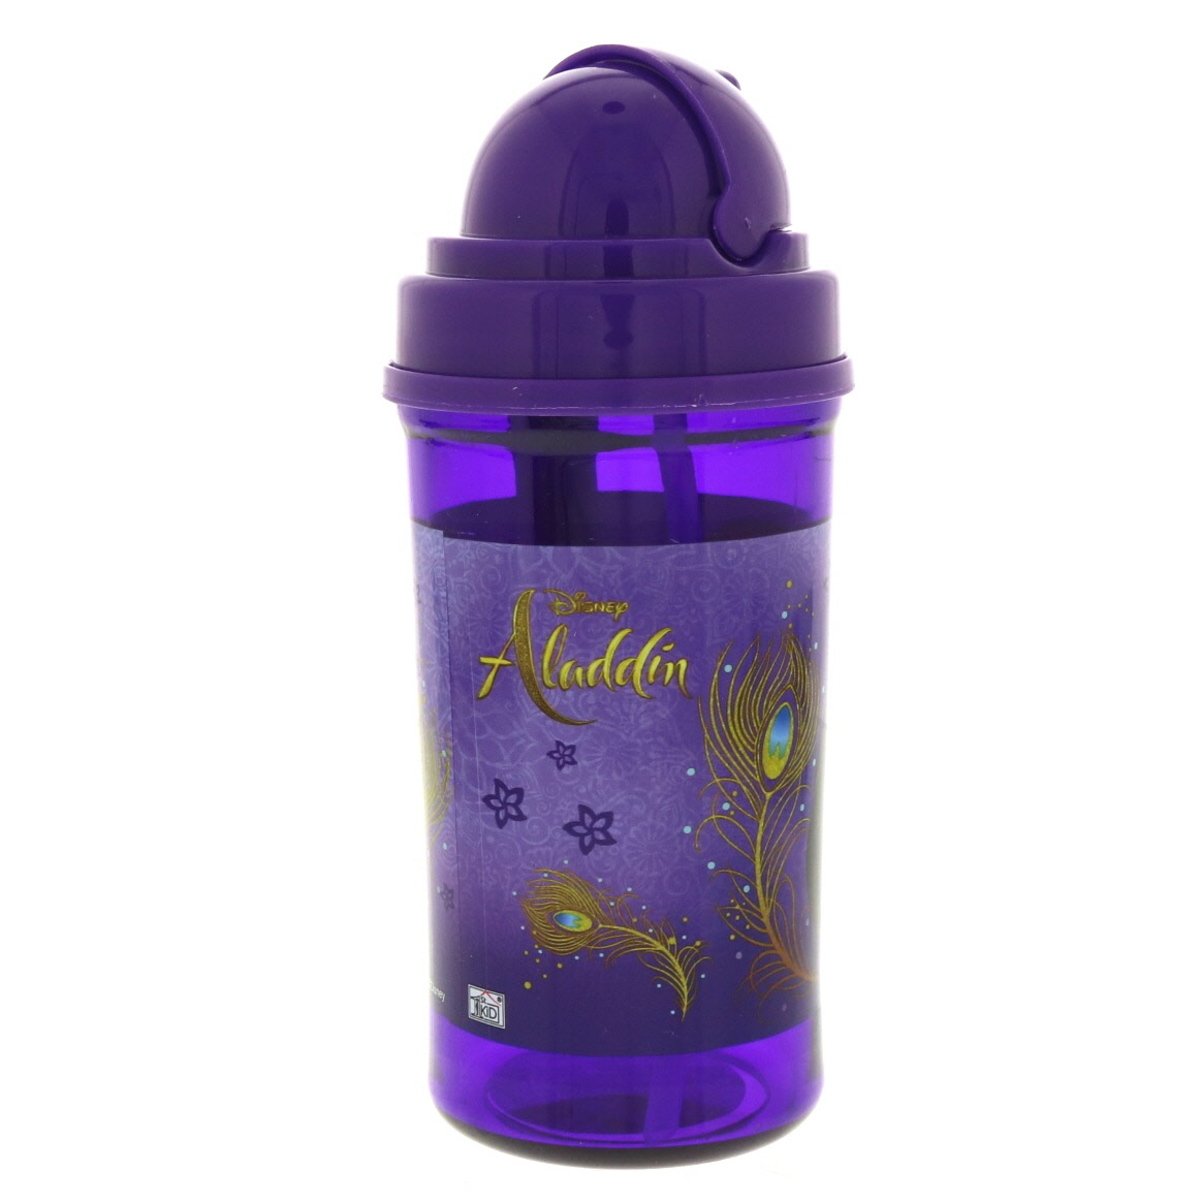 Aladdin Water Bottle 112-19-0901